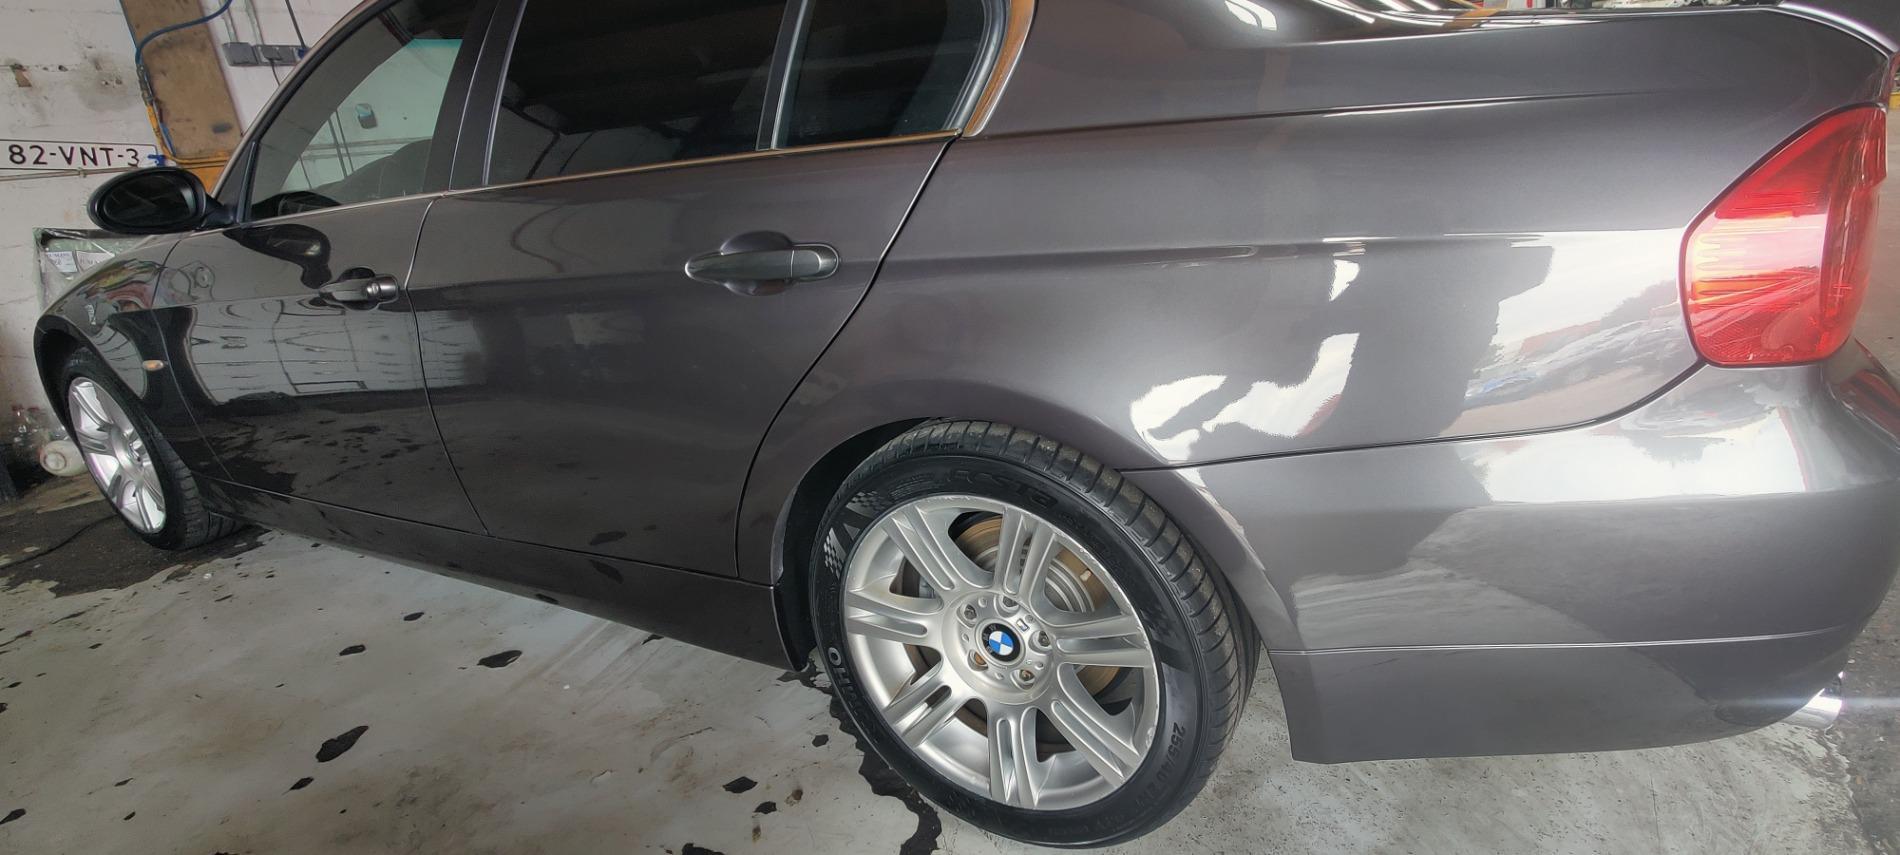 Carrosserie peinture BMW 325i